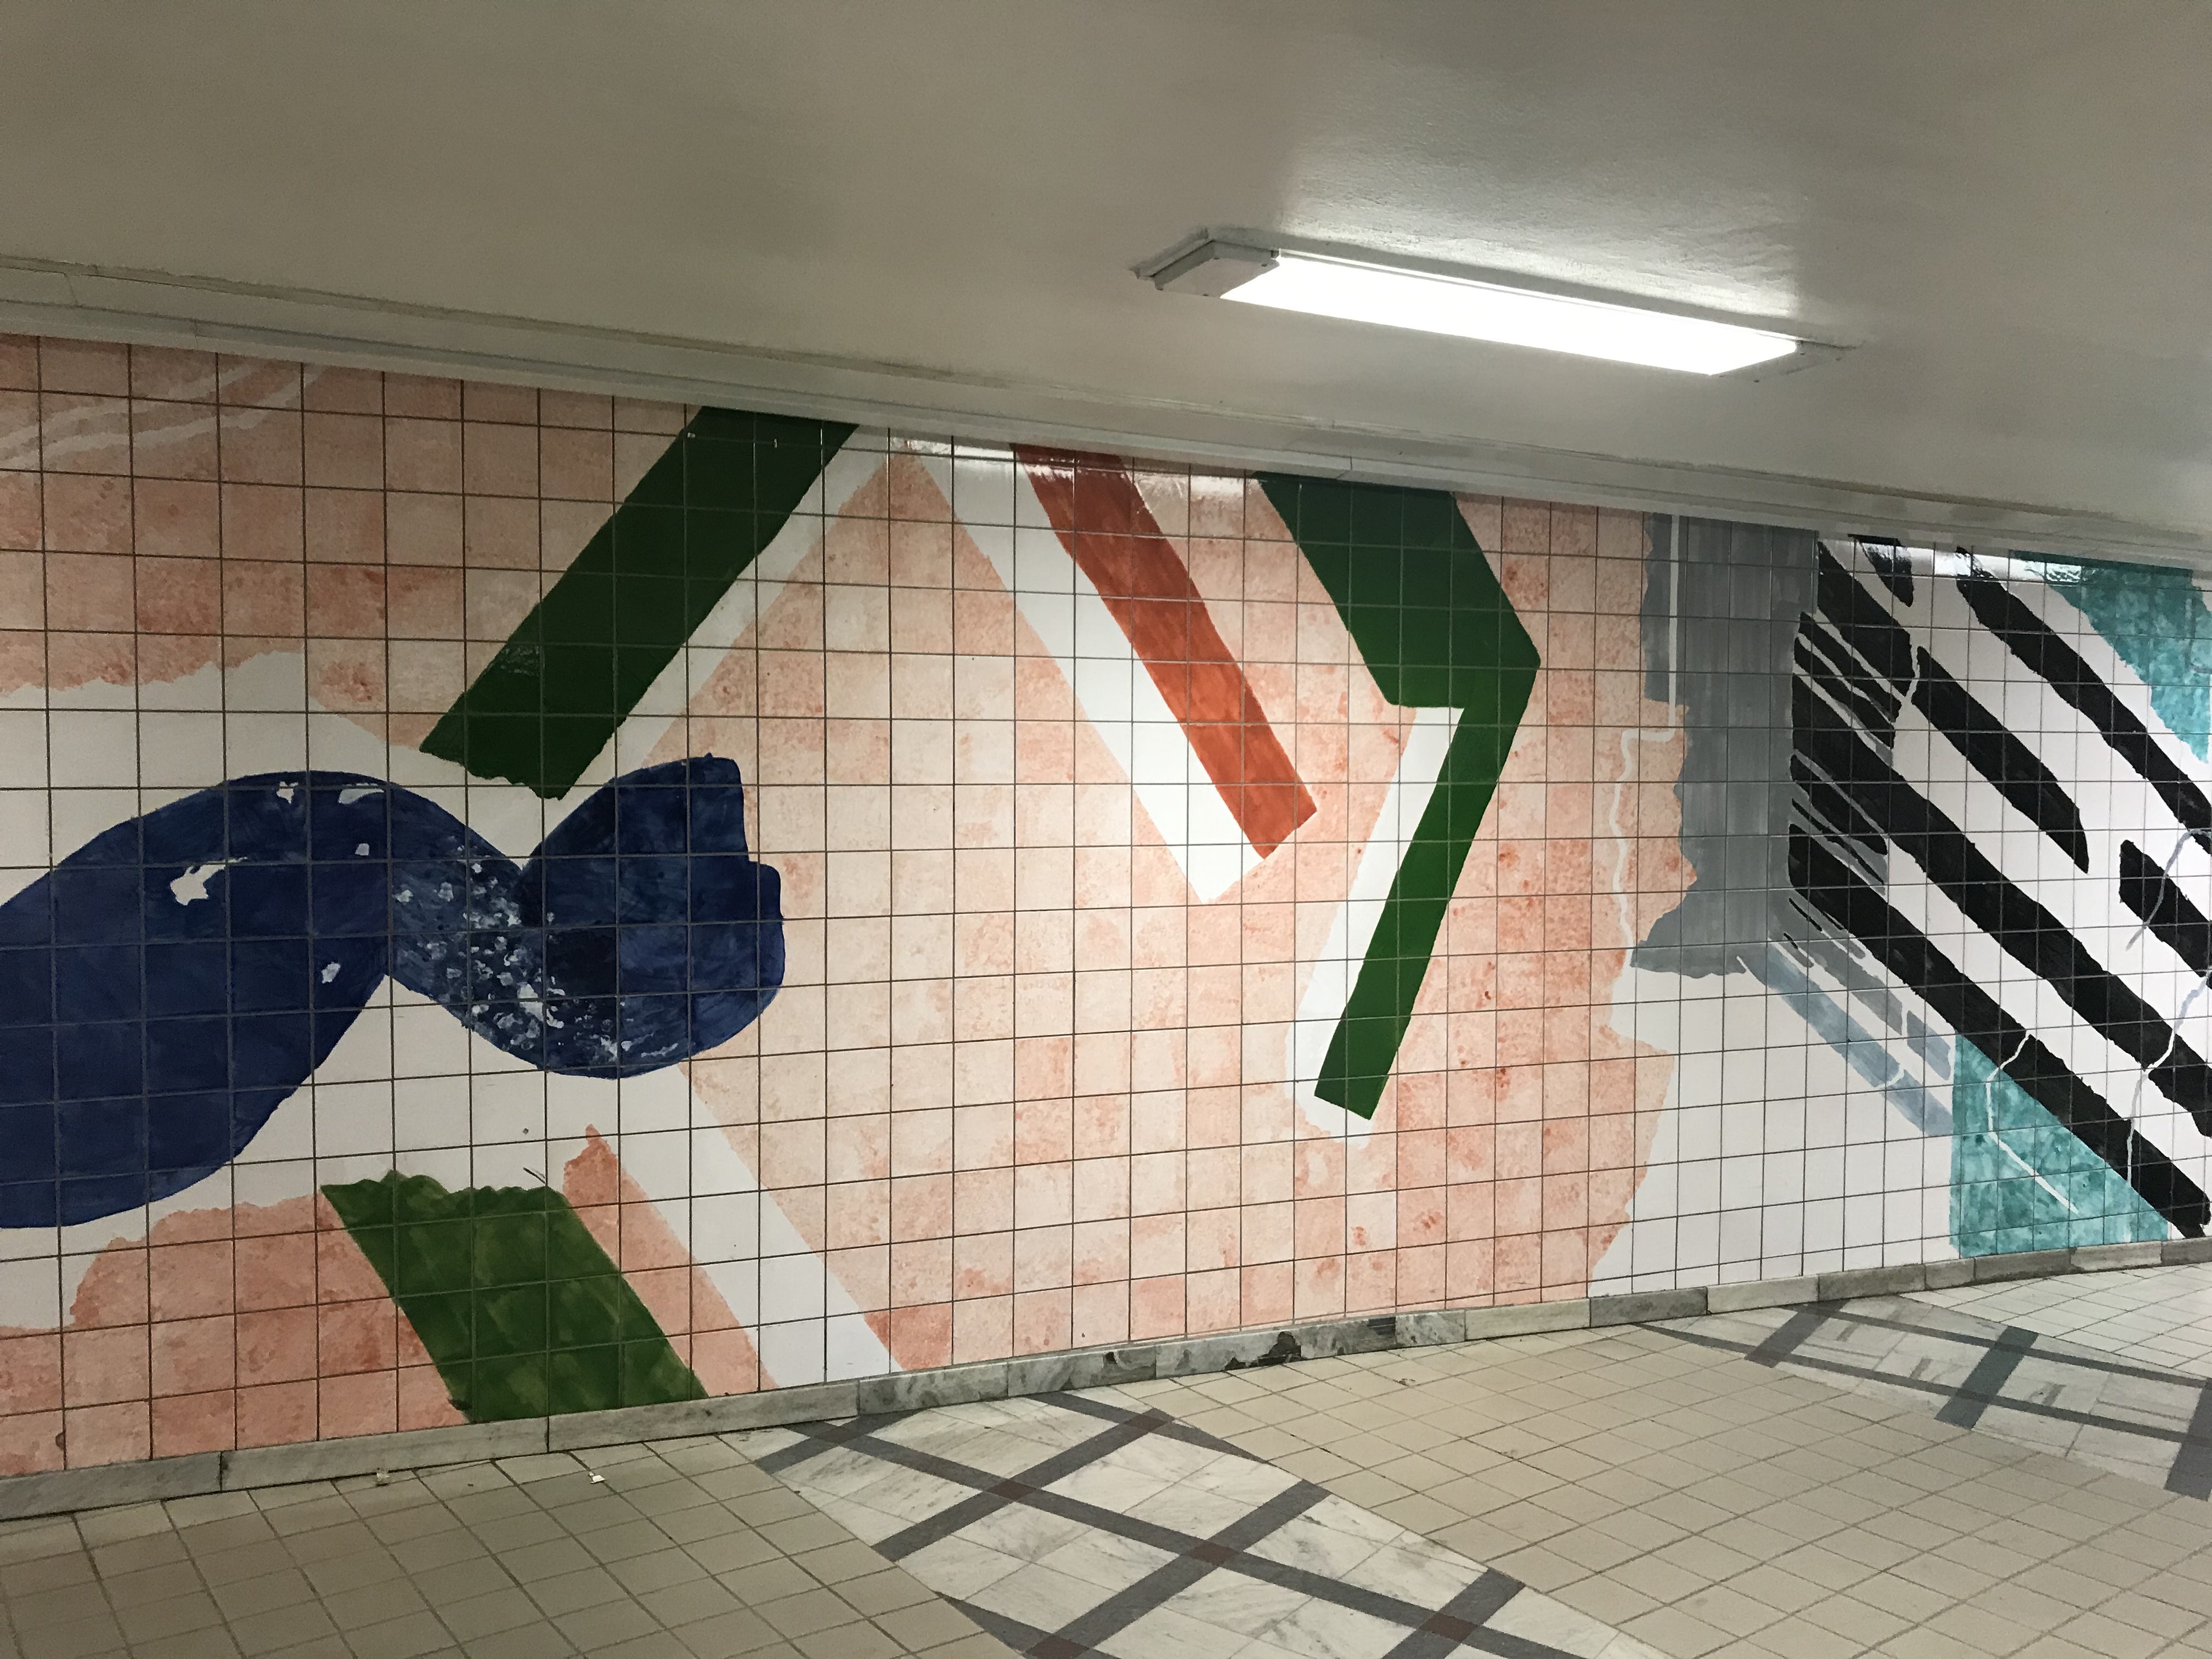 Stockholm underground (metro), the largest art exhibit in the world